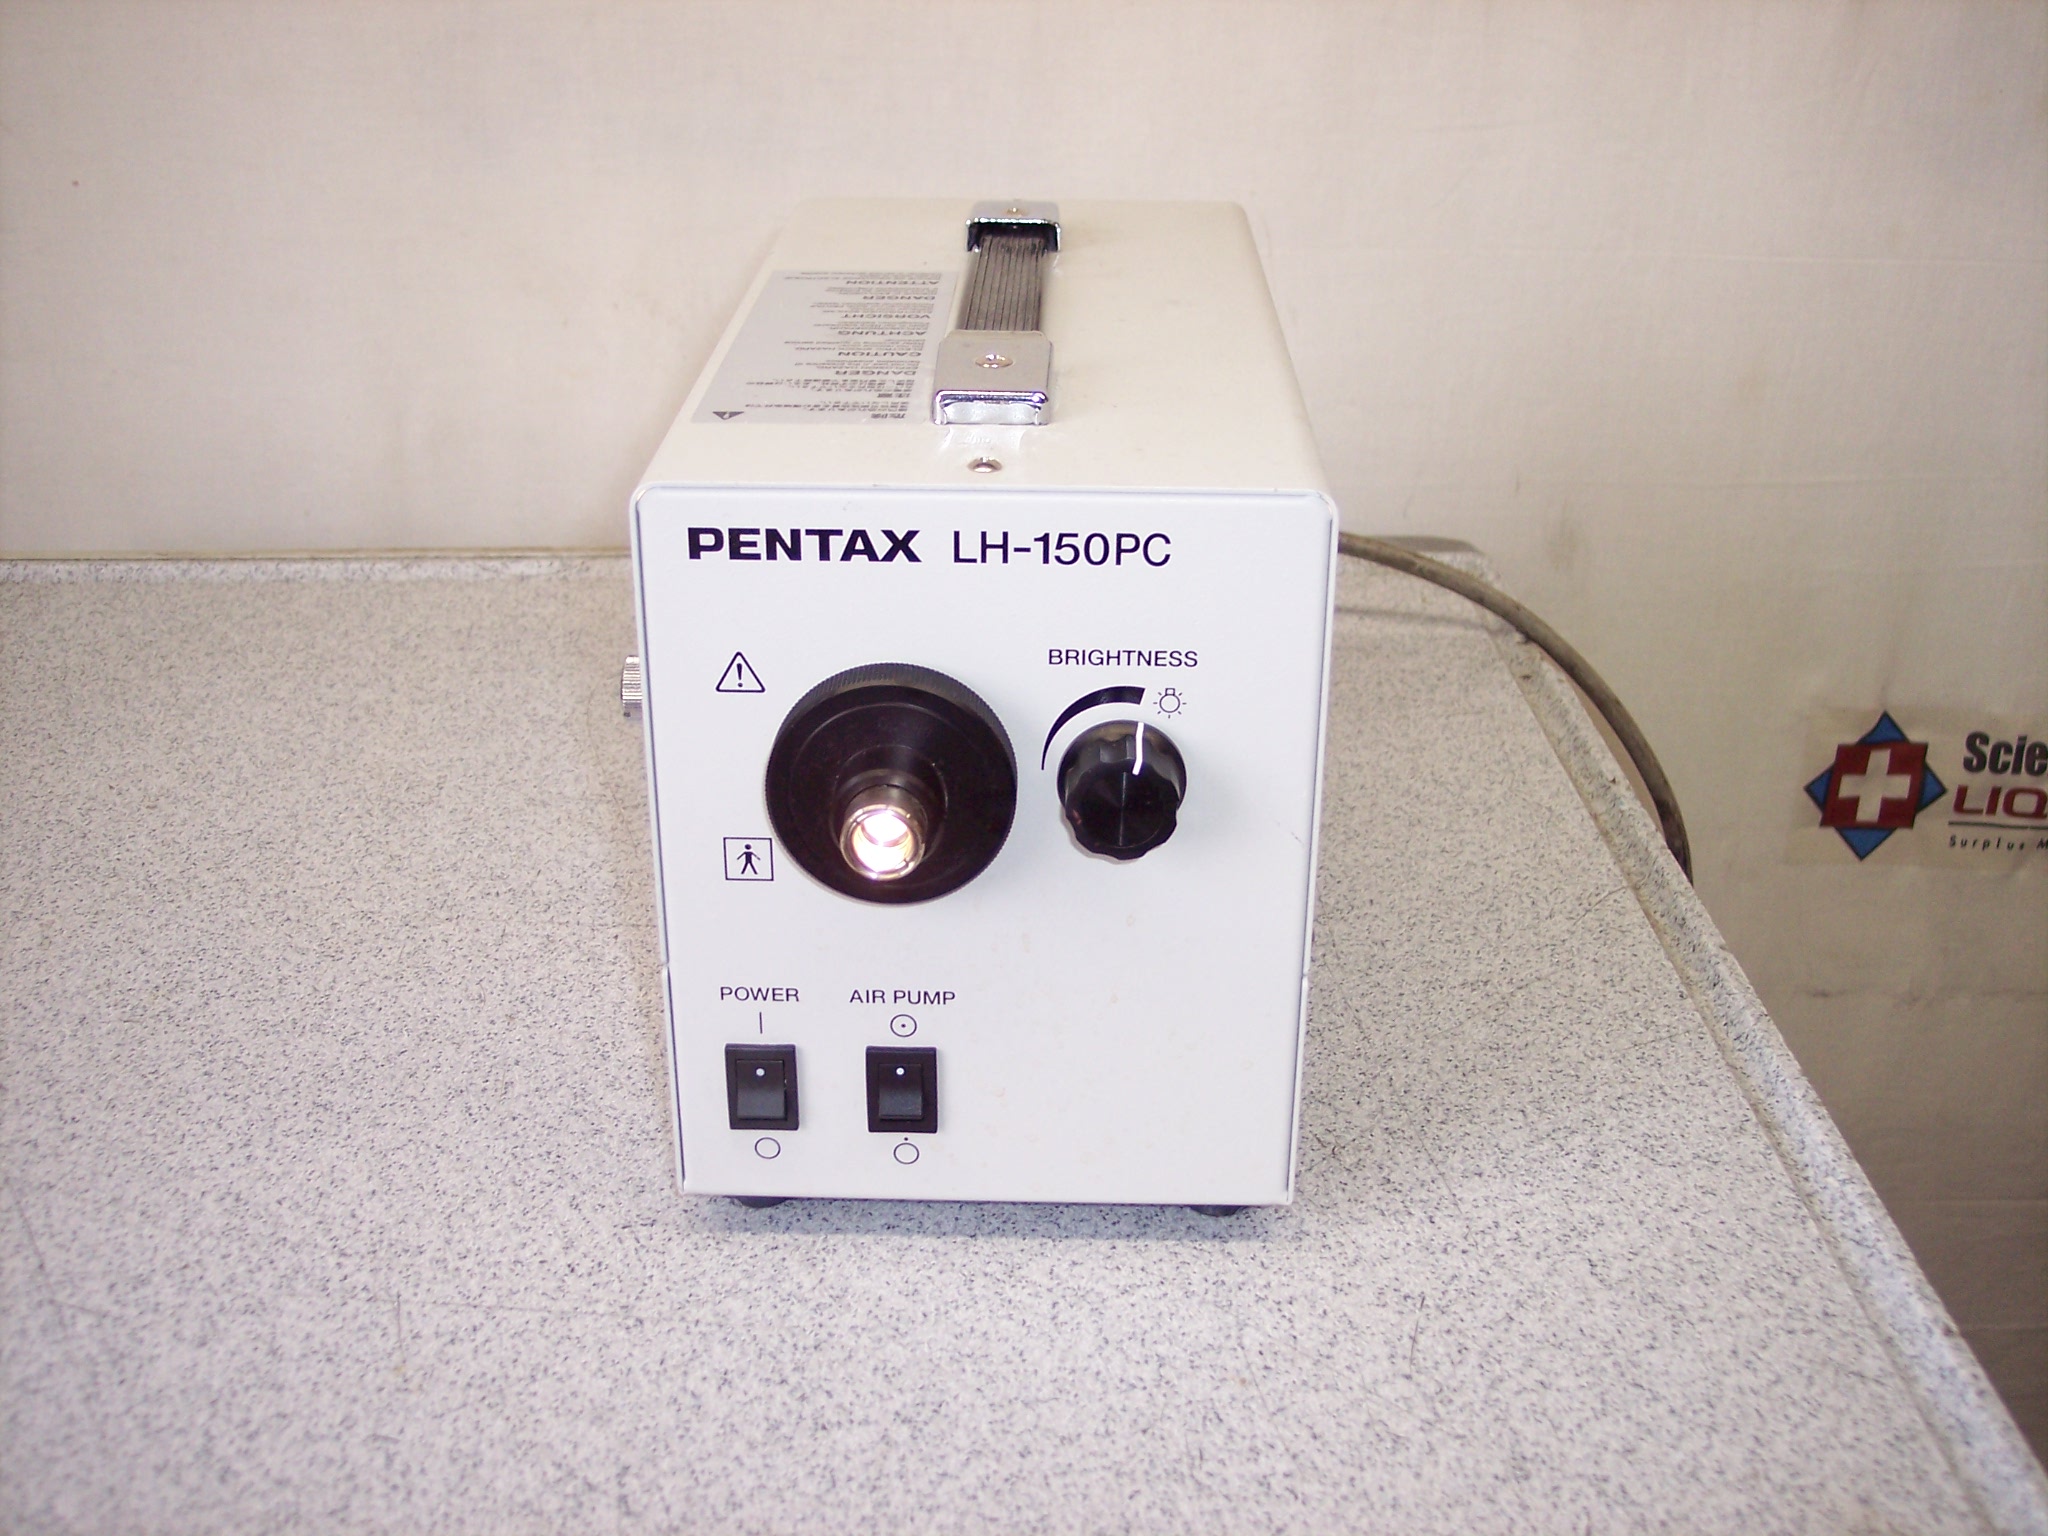 Pentax LH-150PC Light Source